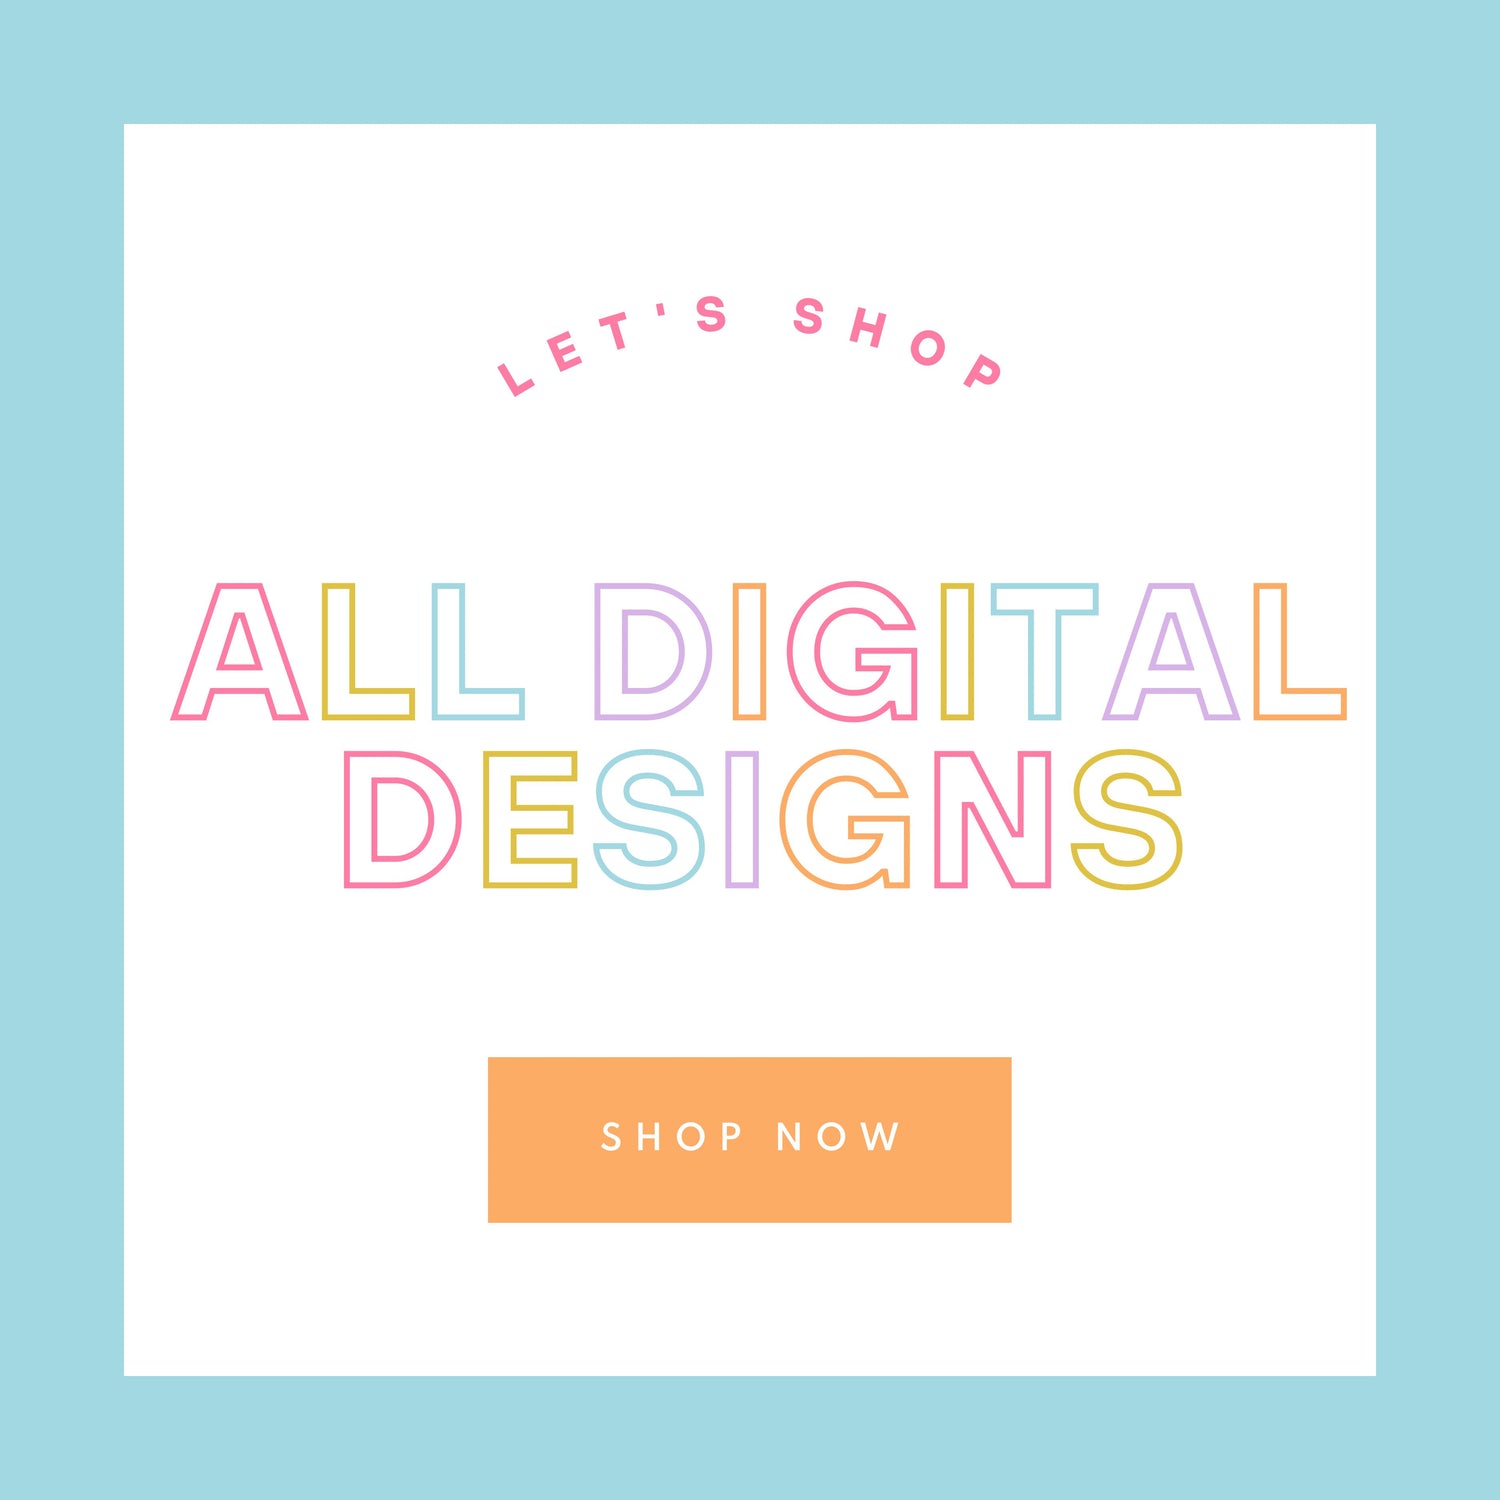 All Digital Designs